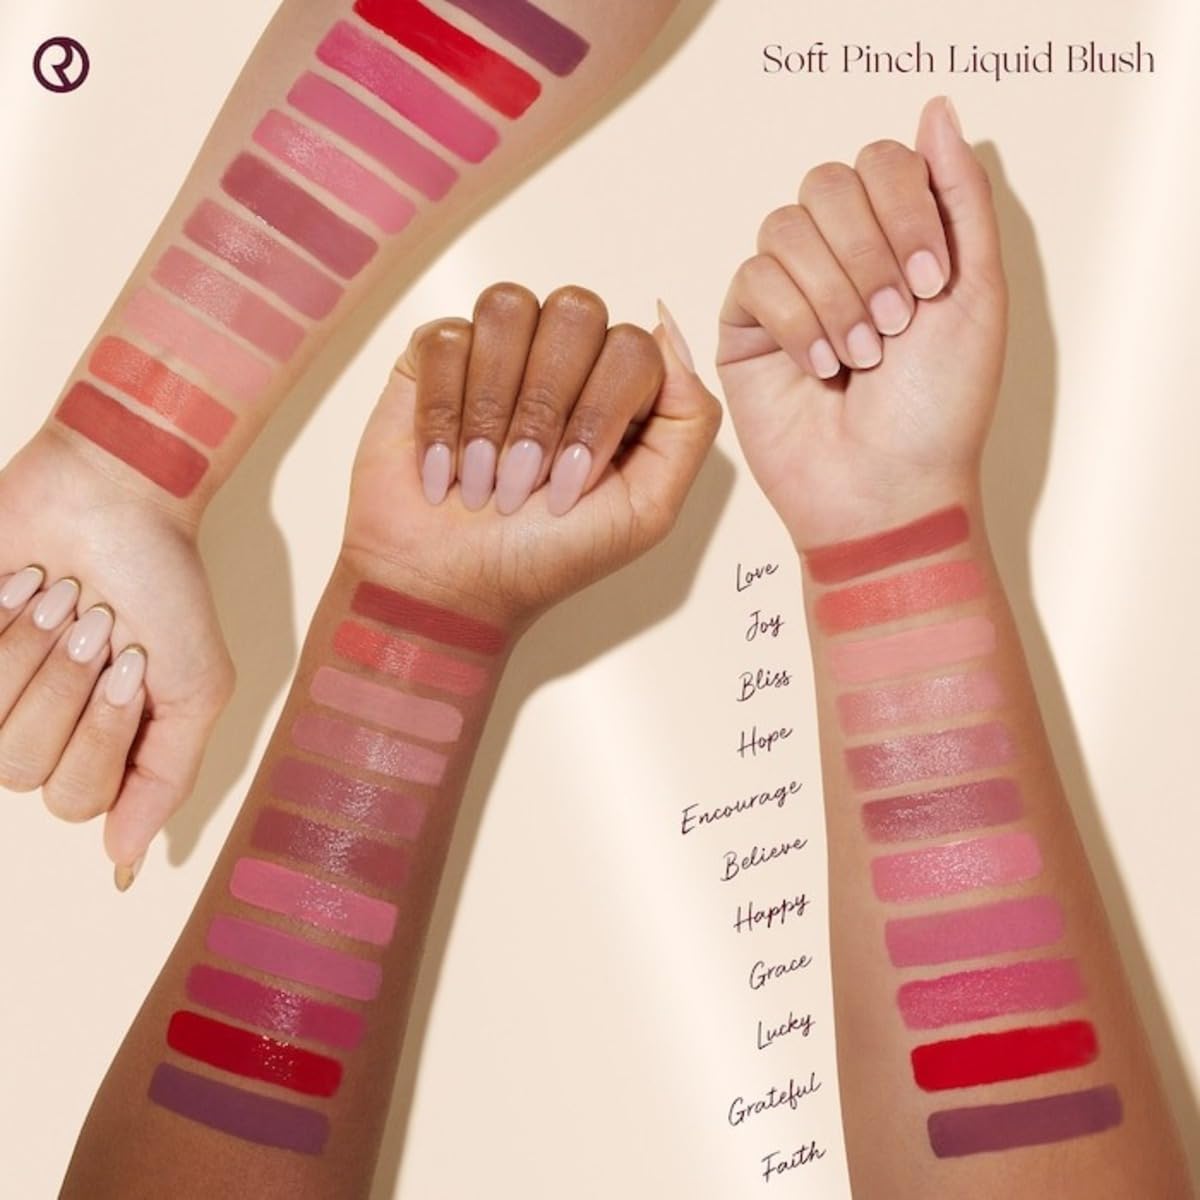 by Selena Gomez Soft Pinch Liquid Blush Mini Size - Encourage - Soft Neutral Pink